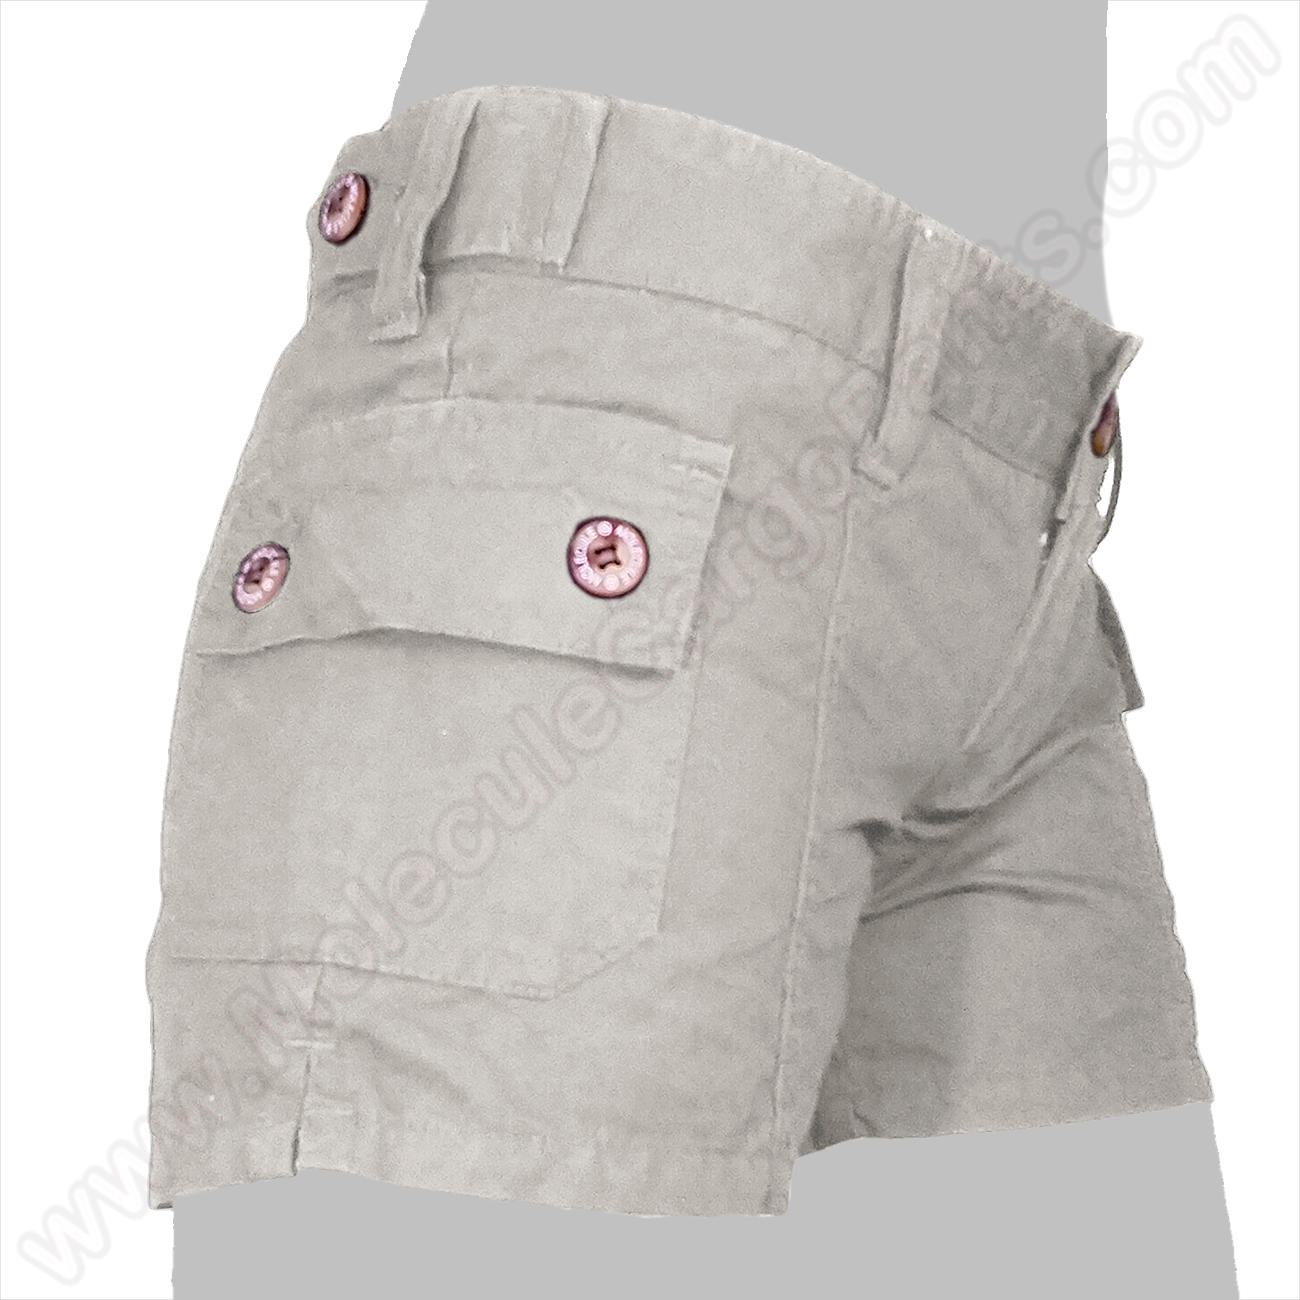 45046 Molecule Women Pants Funky Hot Pants Beige-Cream short cargo pants